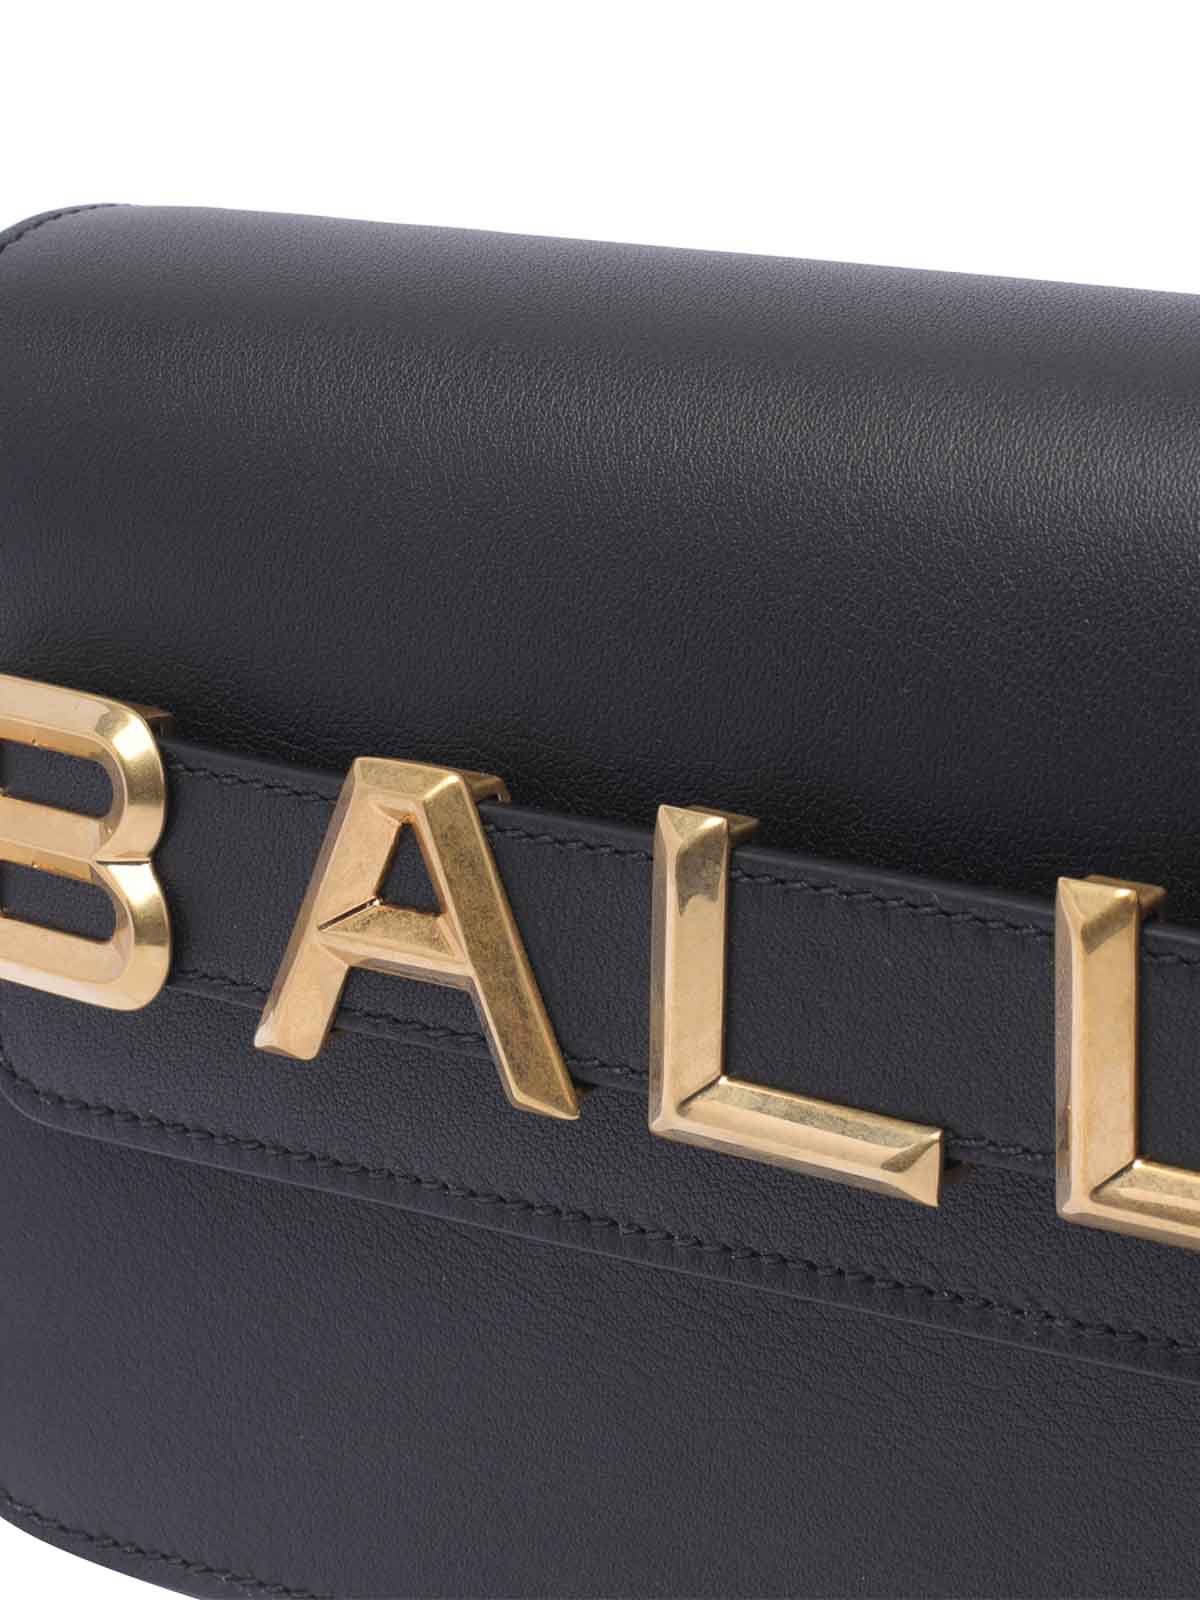 Shop Bally Logo Crossbody Bag In Black